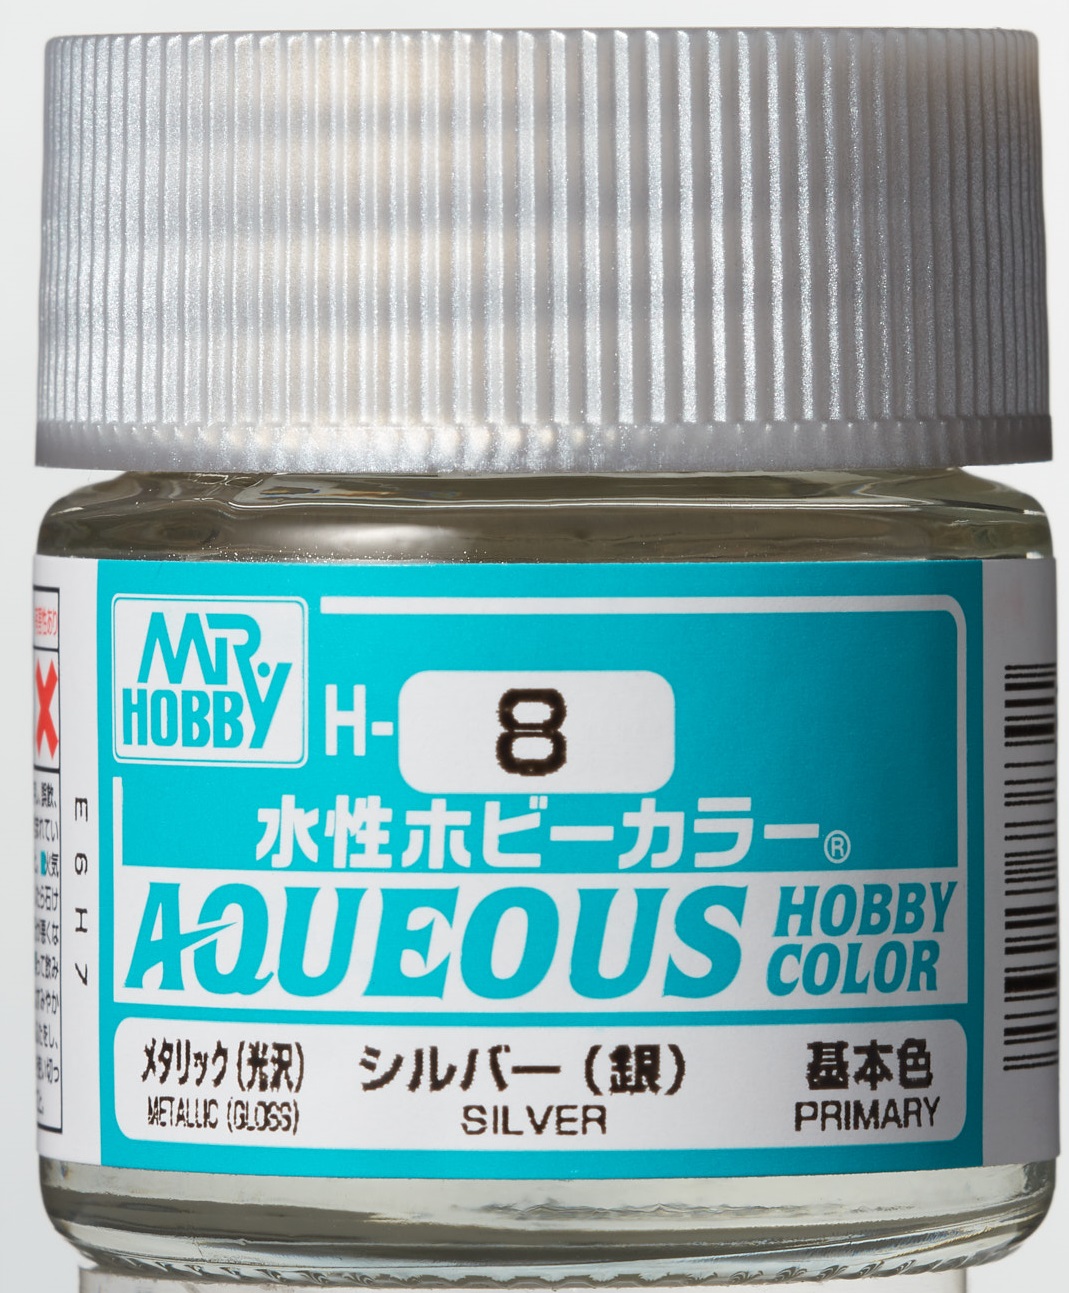 Mr. Aqueous Hobby Color - Silver - H8 - Silber